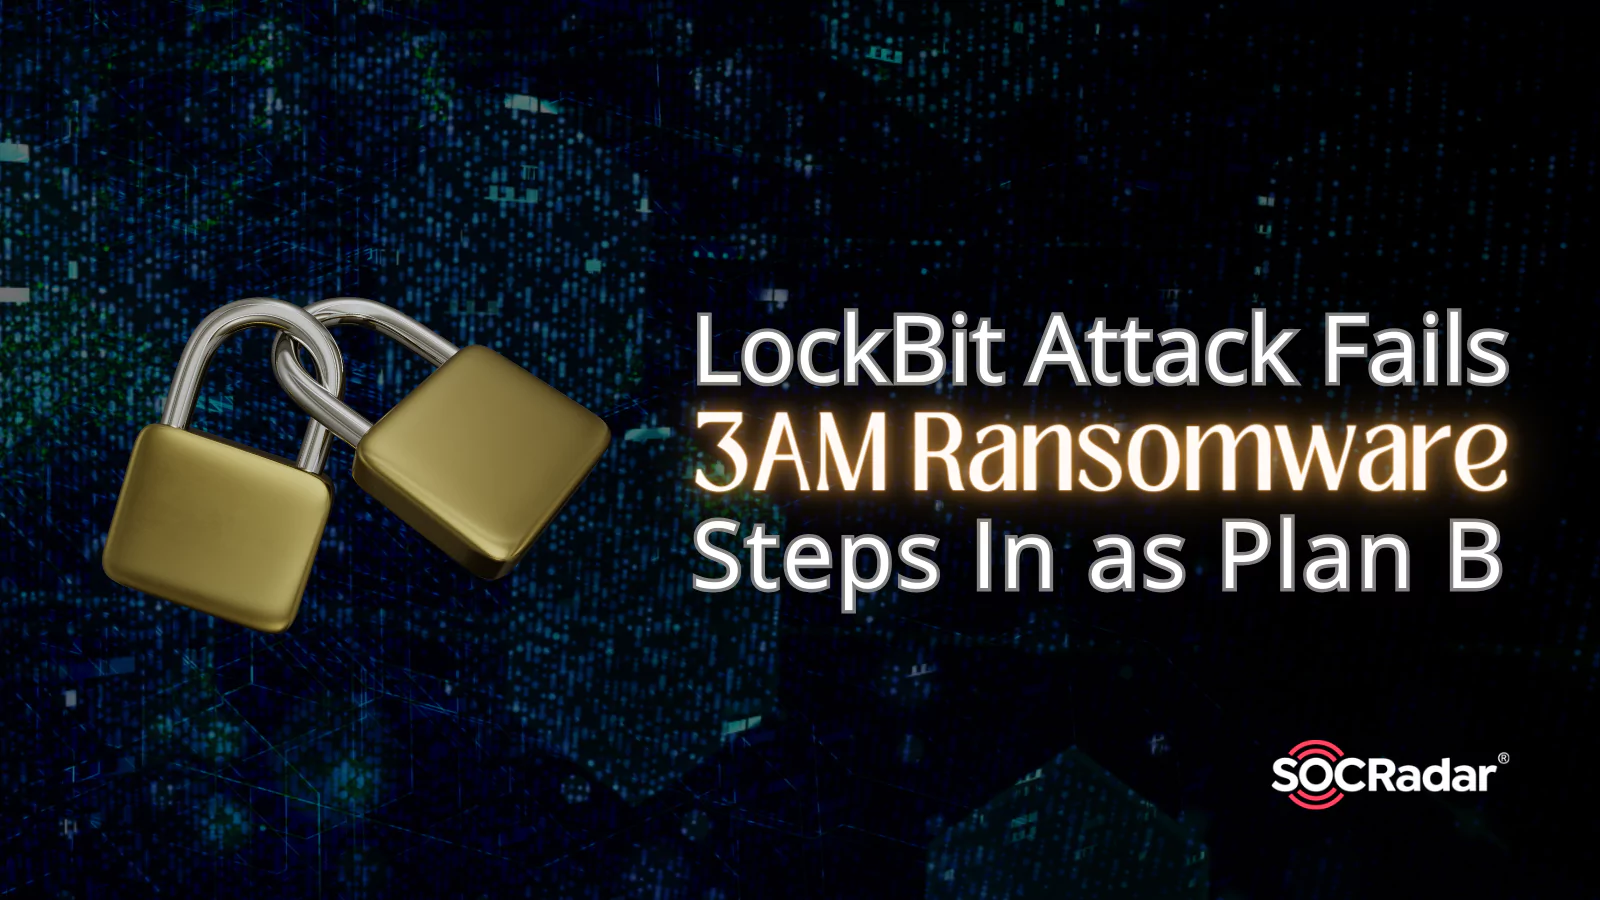 SOCRadar® Cyber Intelligence Inc. | LockBit Attack Fails, 3AM Ransomware Steps In as Plan B